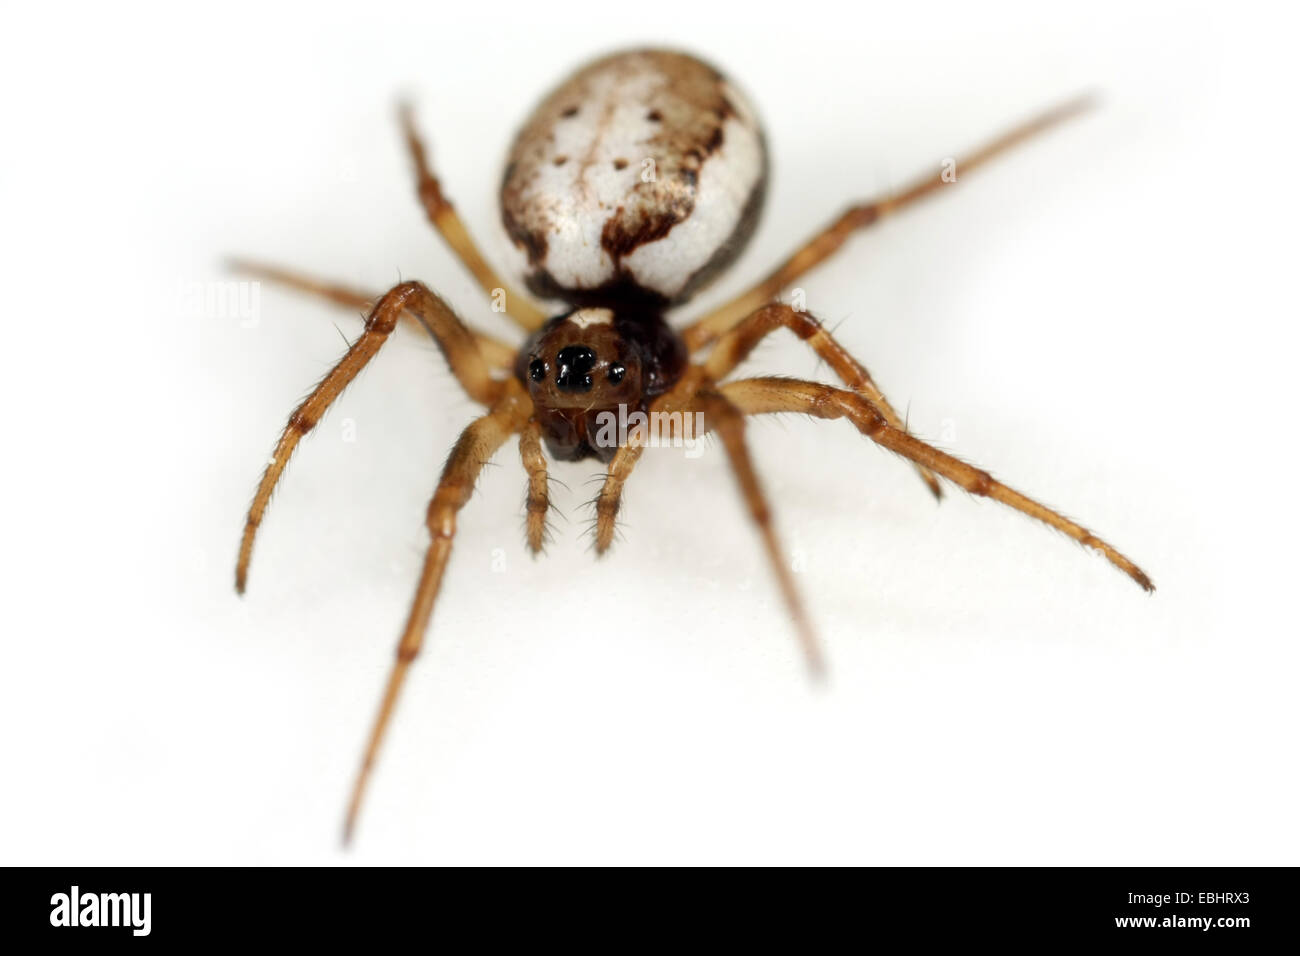 A Female orbweaving spider (Hypsosinga albovittata) on white background. Orbweaving spiders are part of the family Araneidae. Stock Photo